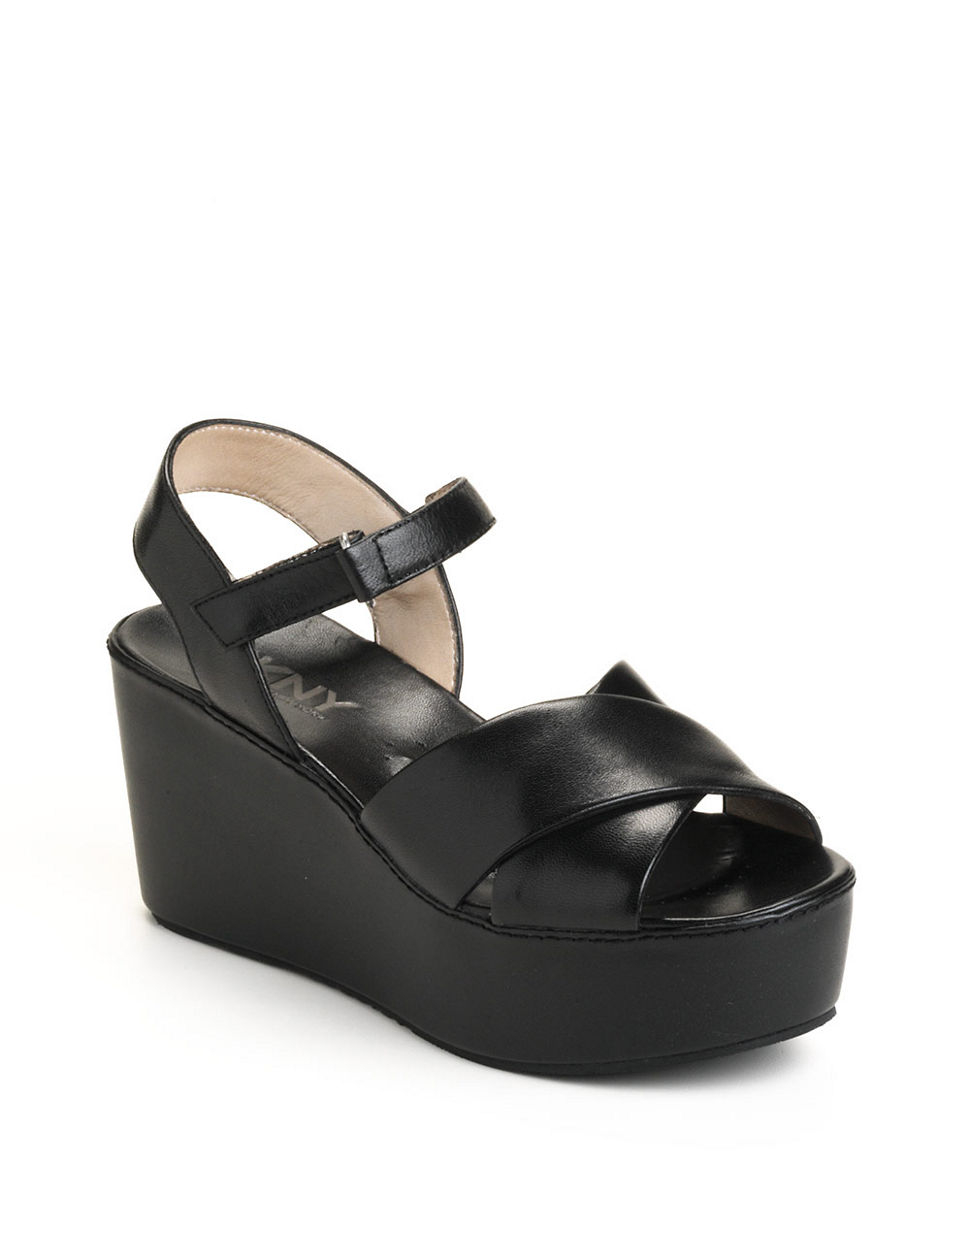 Dkny Saige Leather Platform Wedge Sandals in Black | Lyst